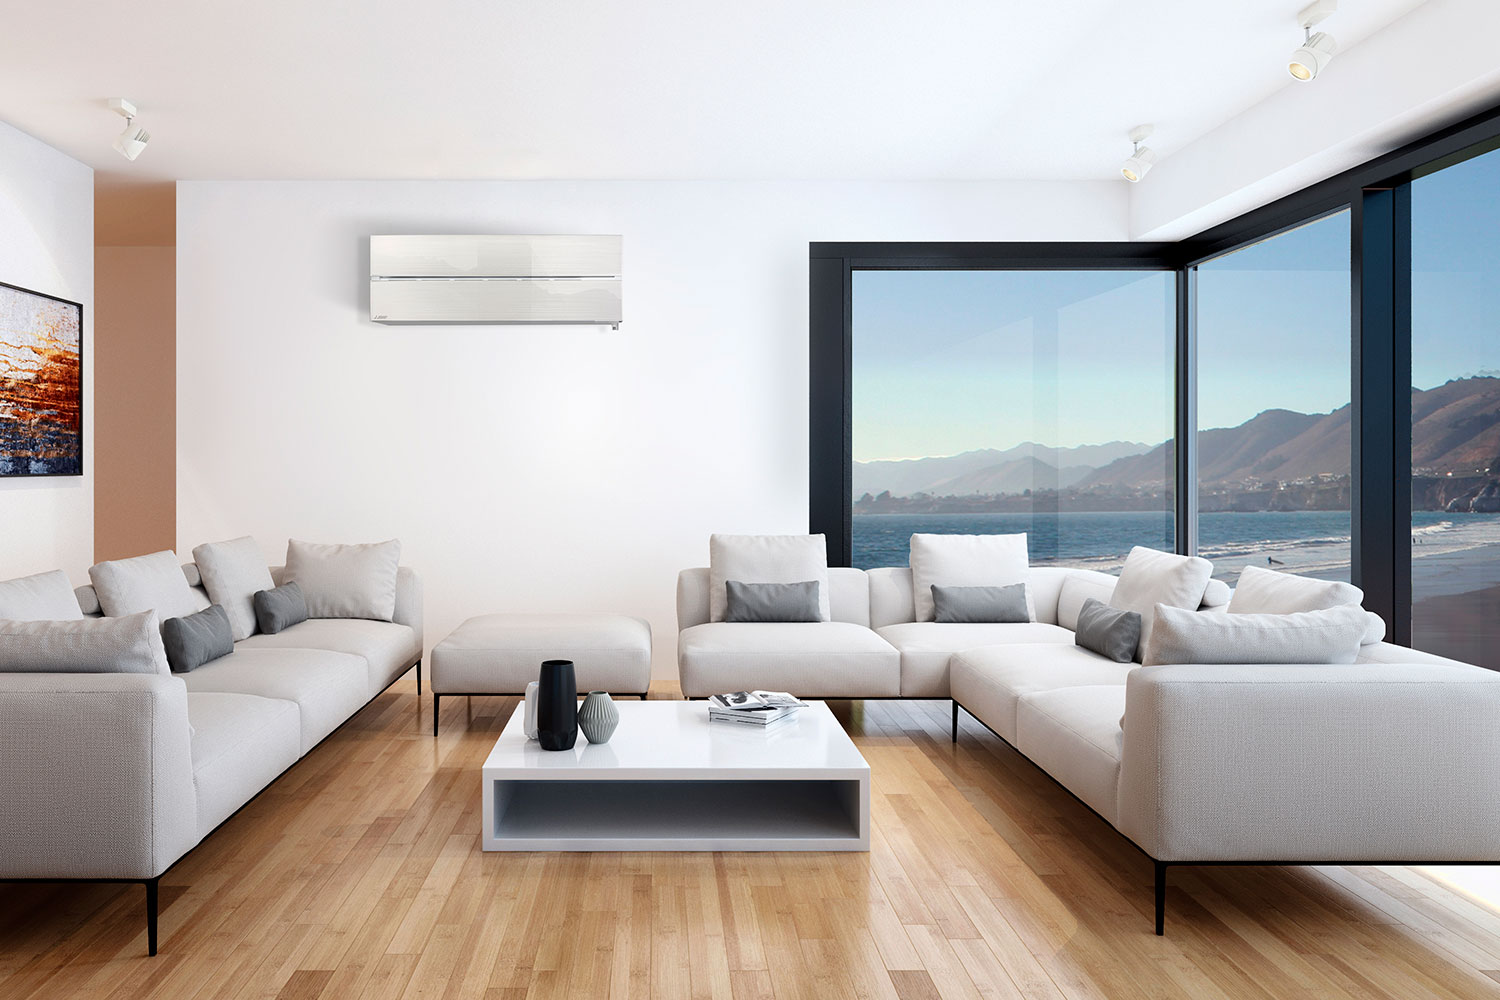 Mitsubsihi high wall heatpump in living room of modern beachside home